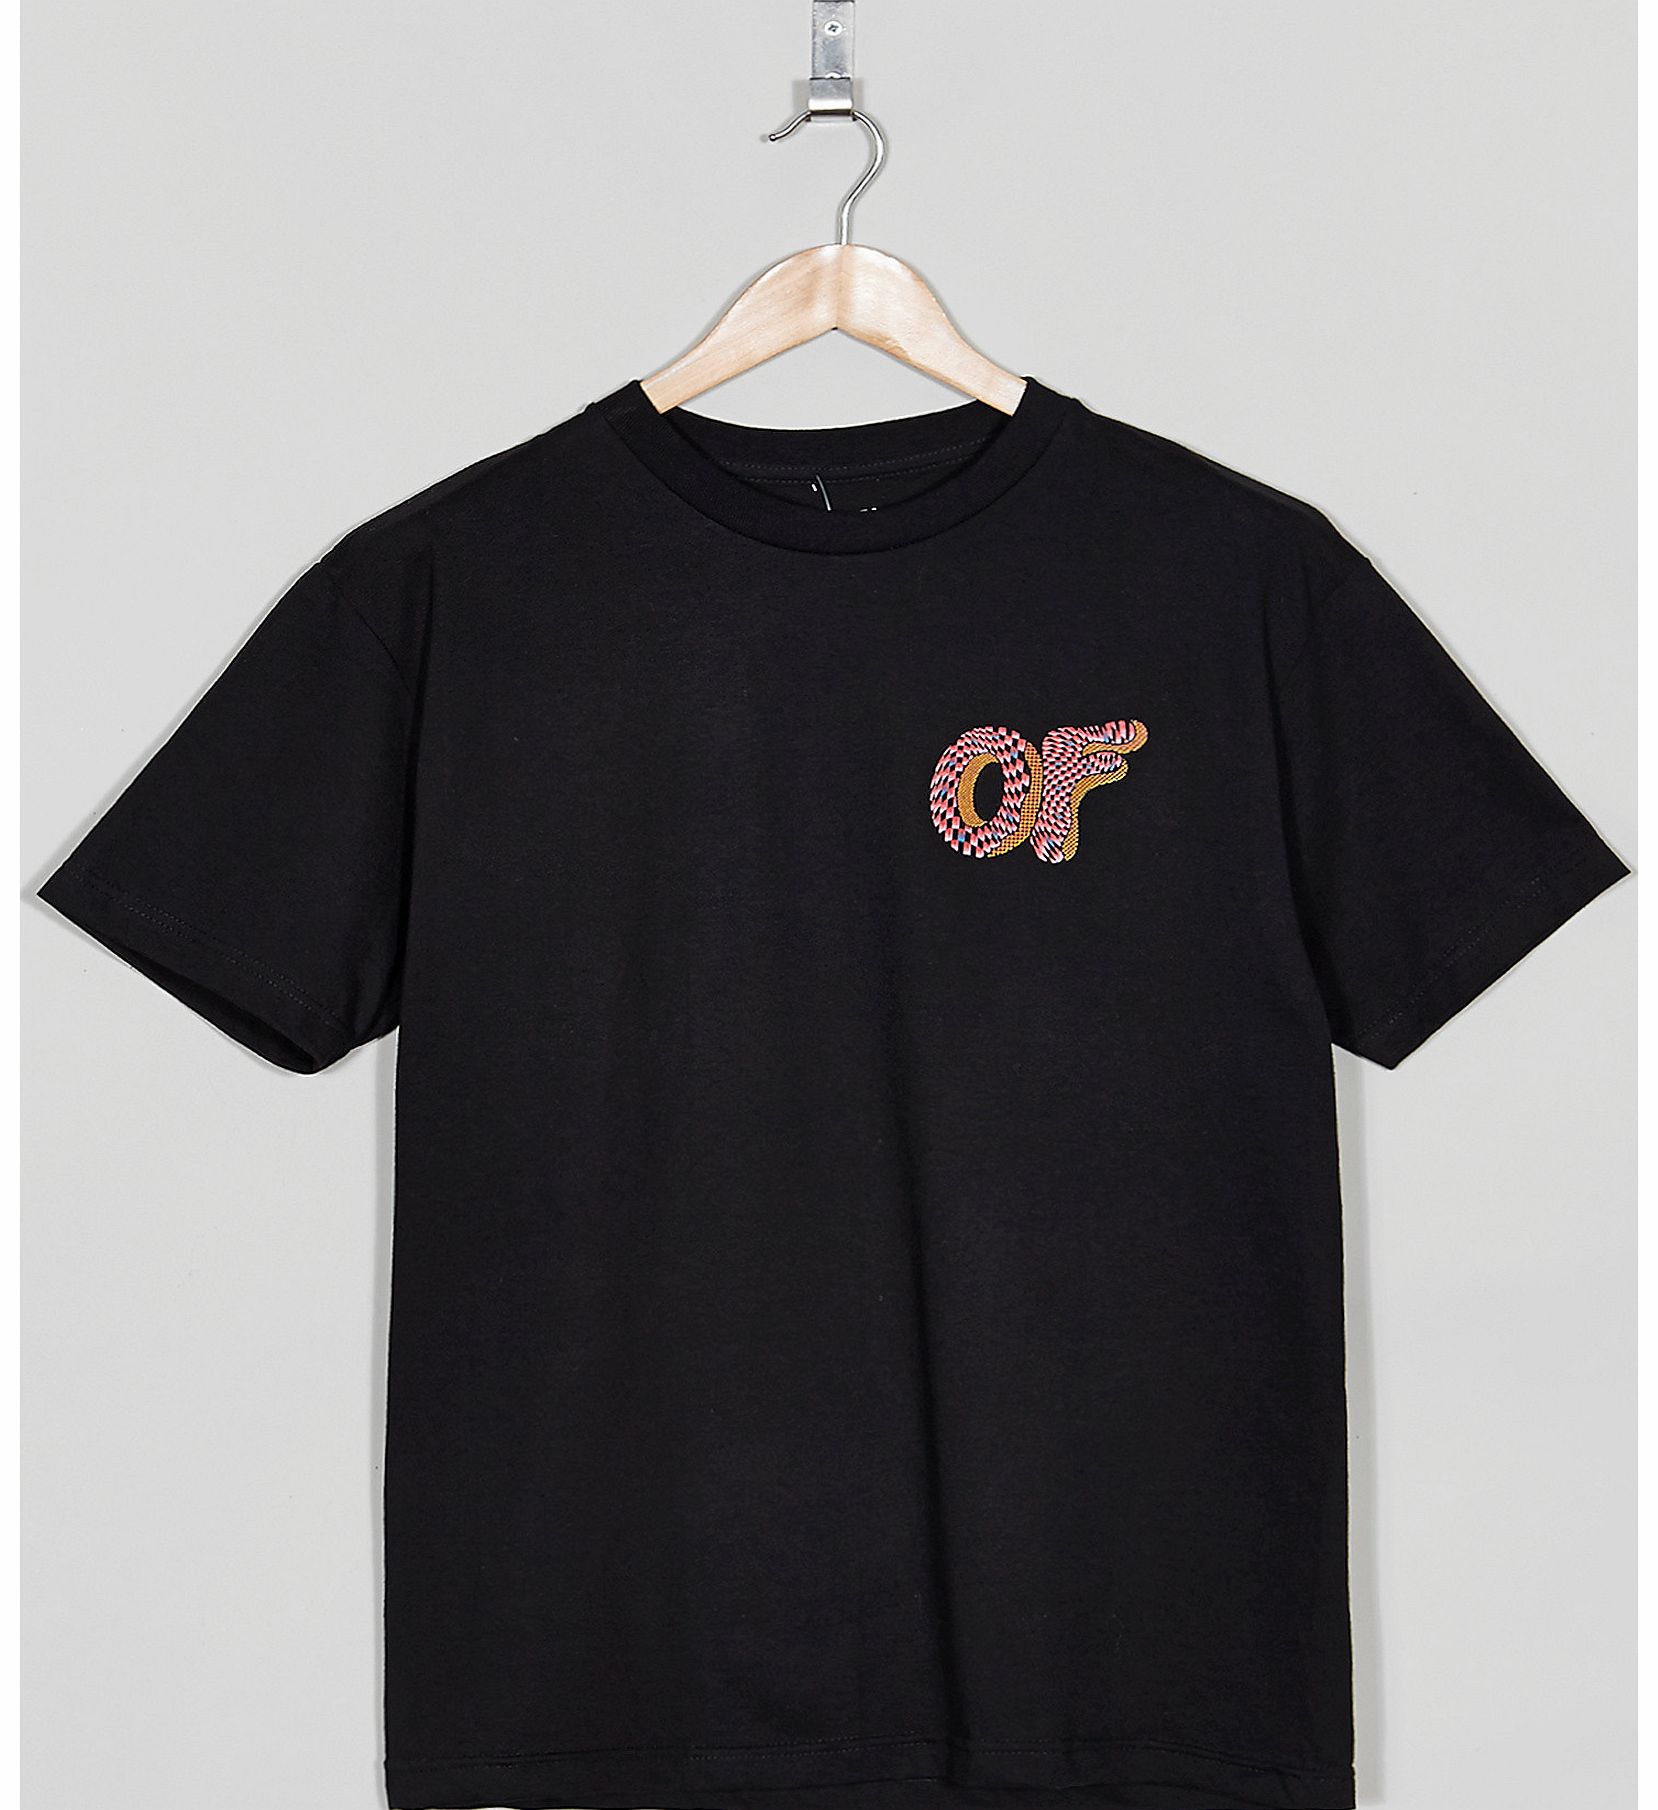 Odd Future Optical Donut T-Shirt